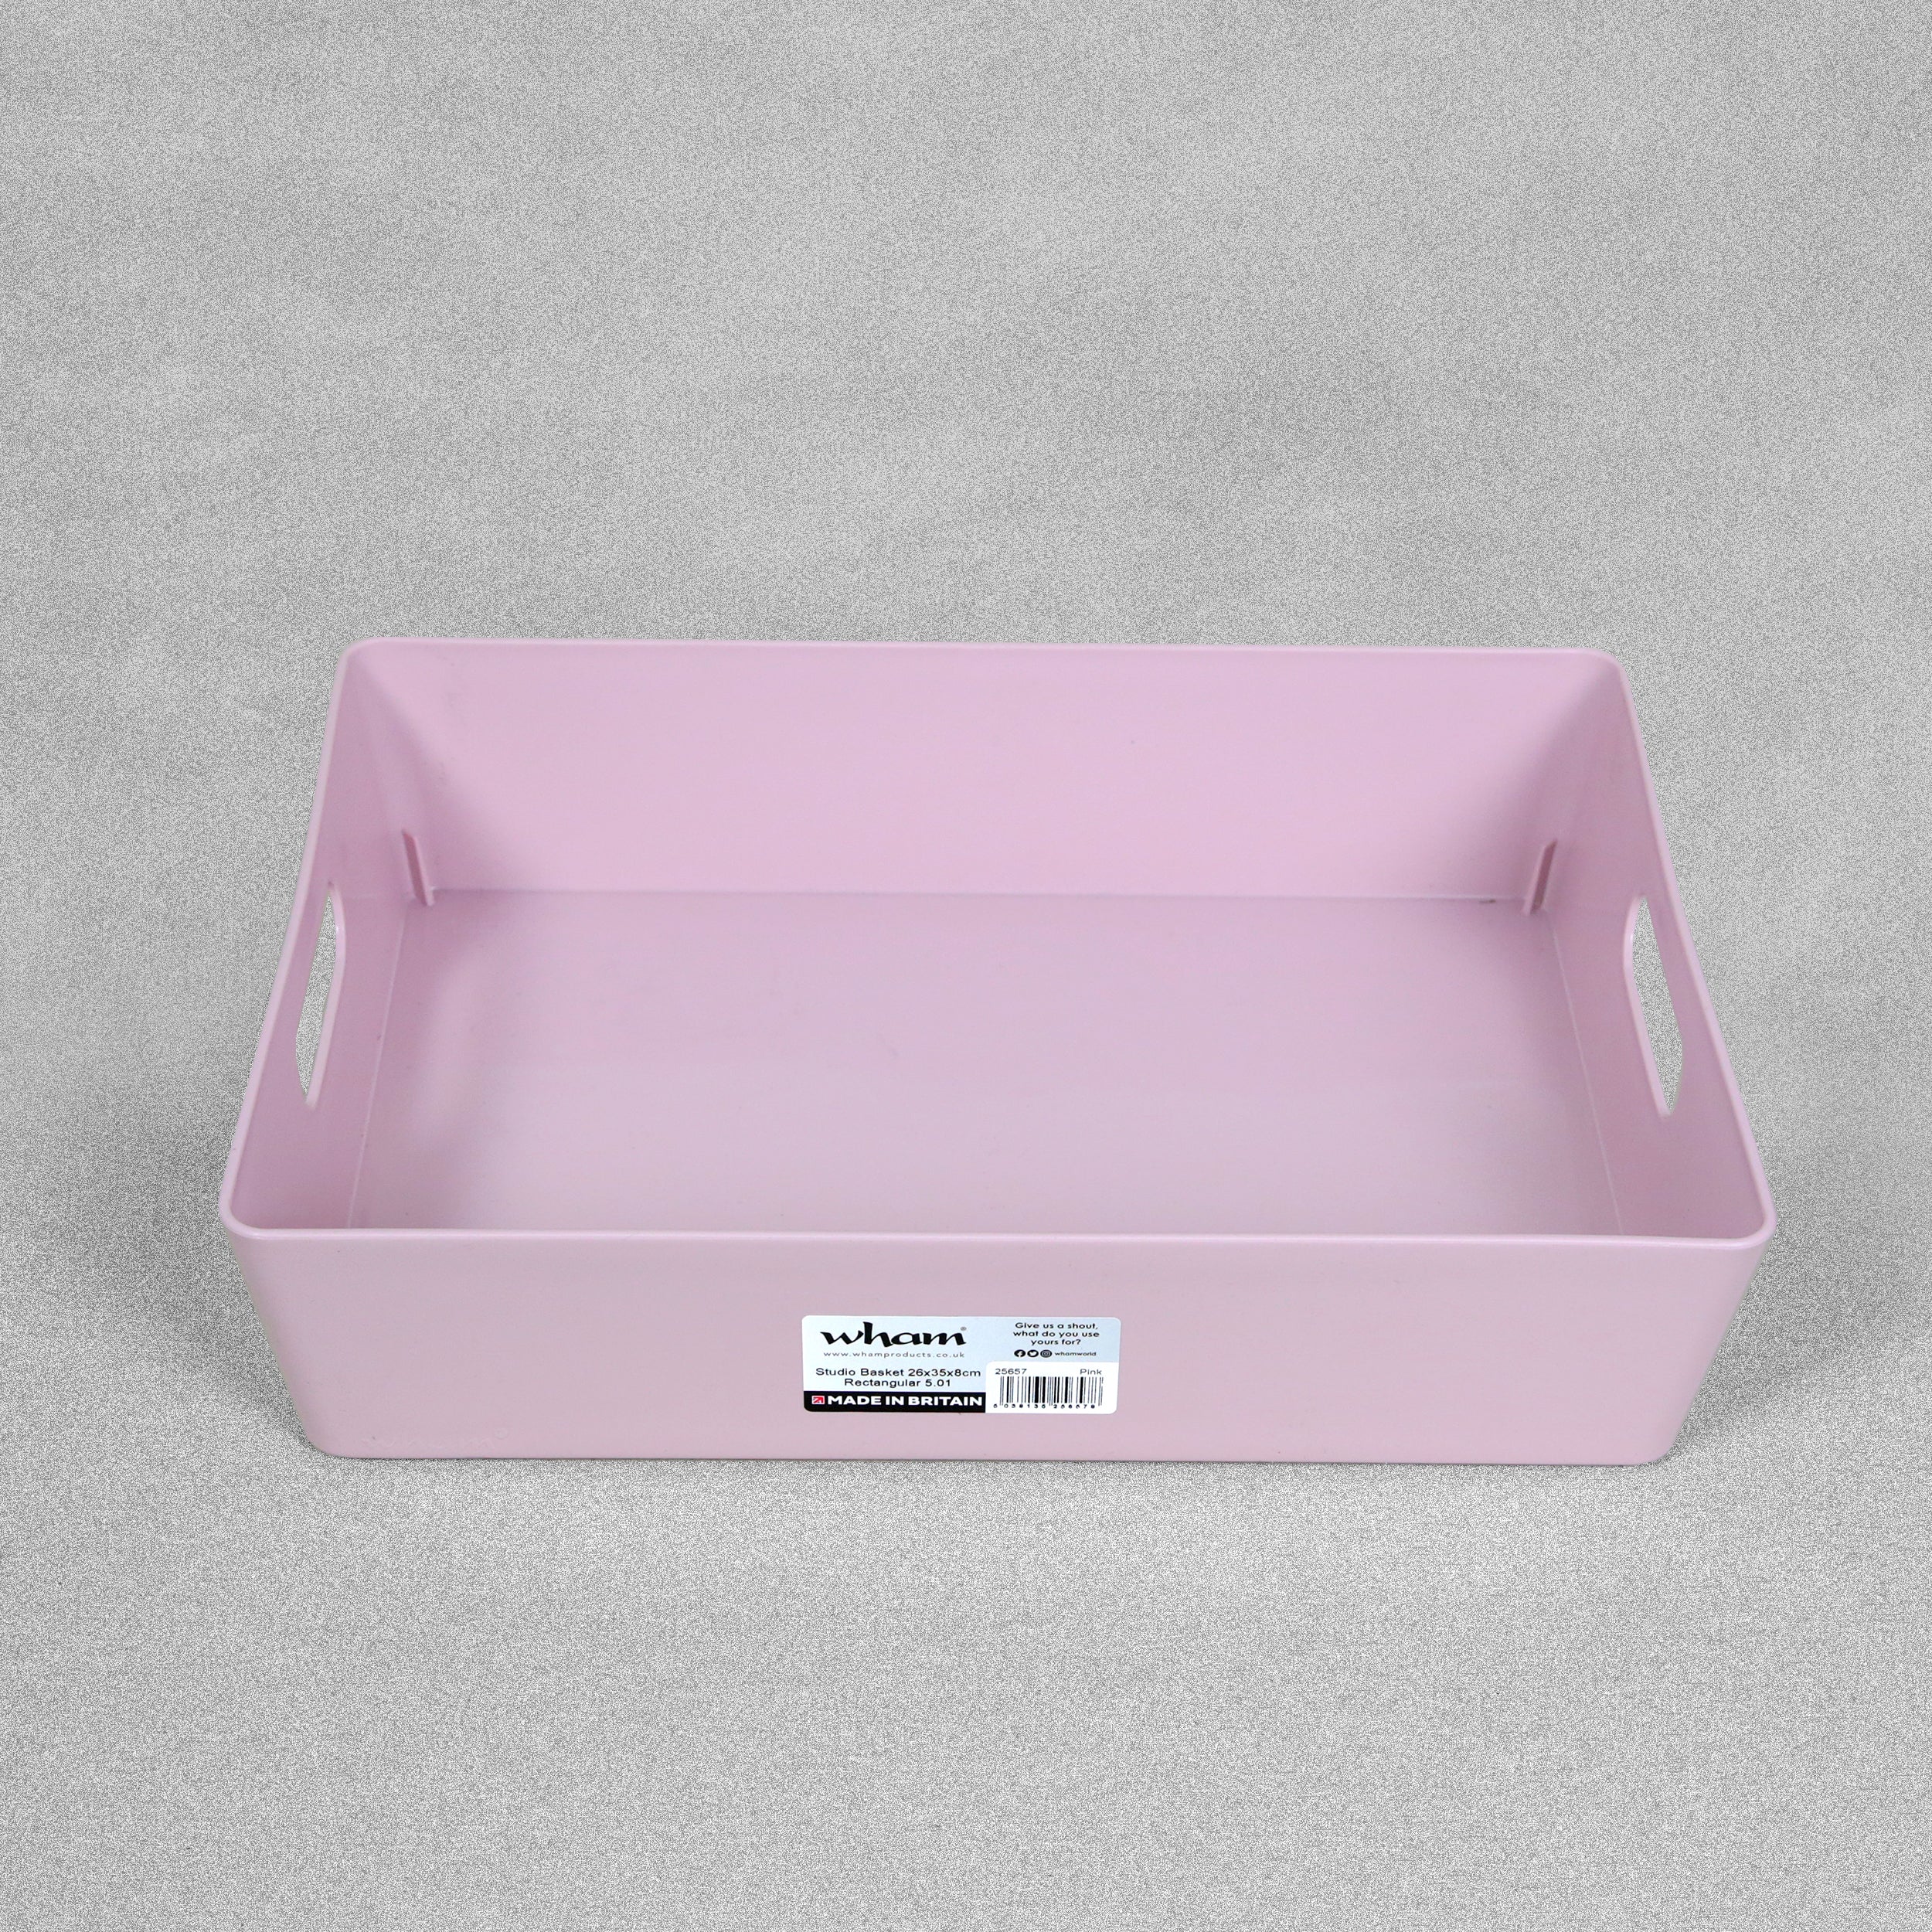 Wham Studio Storage Basket 5.01 - Pink